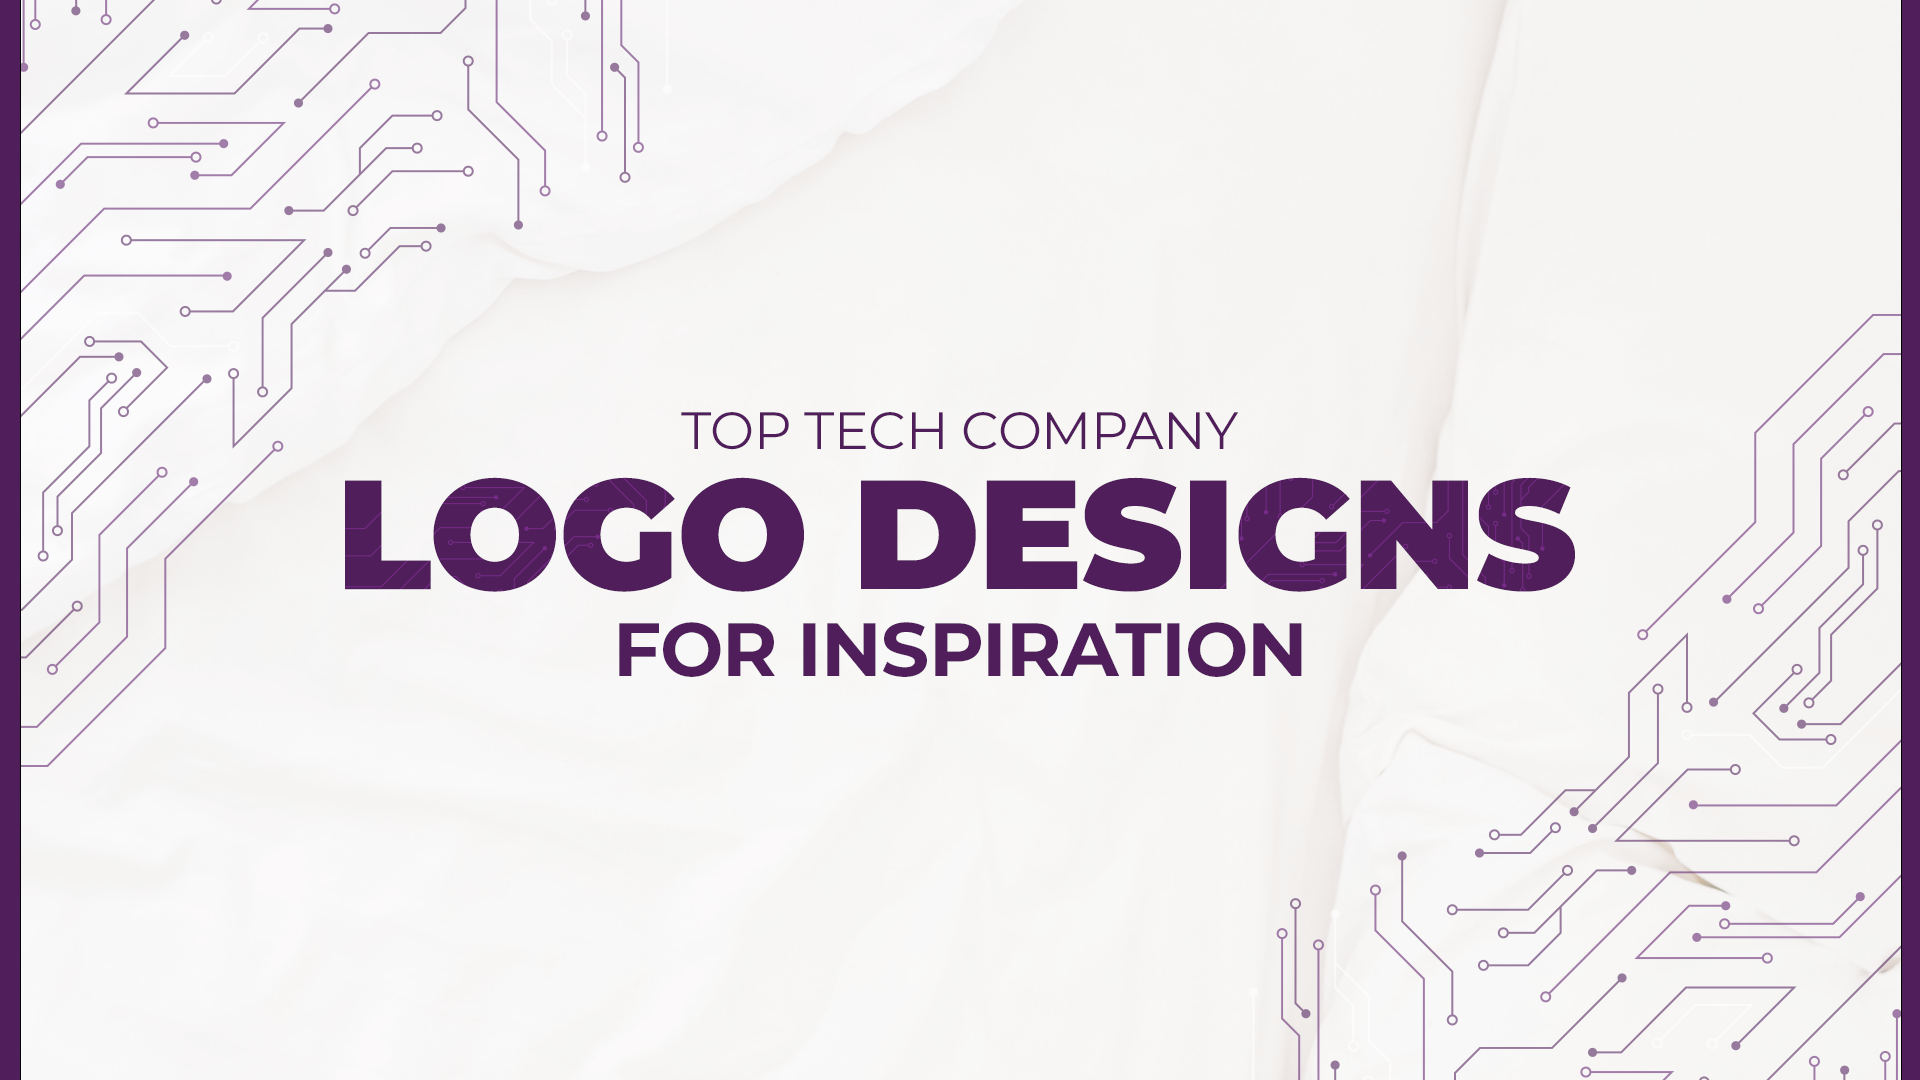 Top Tech Company Logo Designs for Inspiration